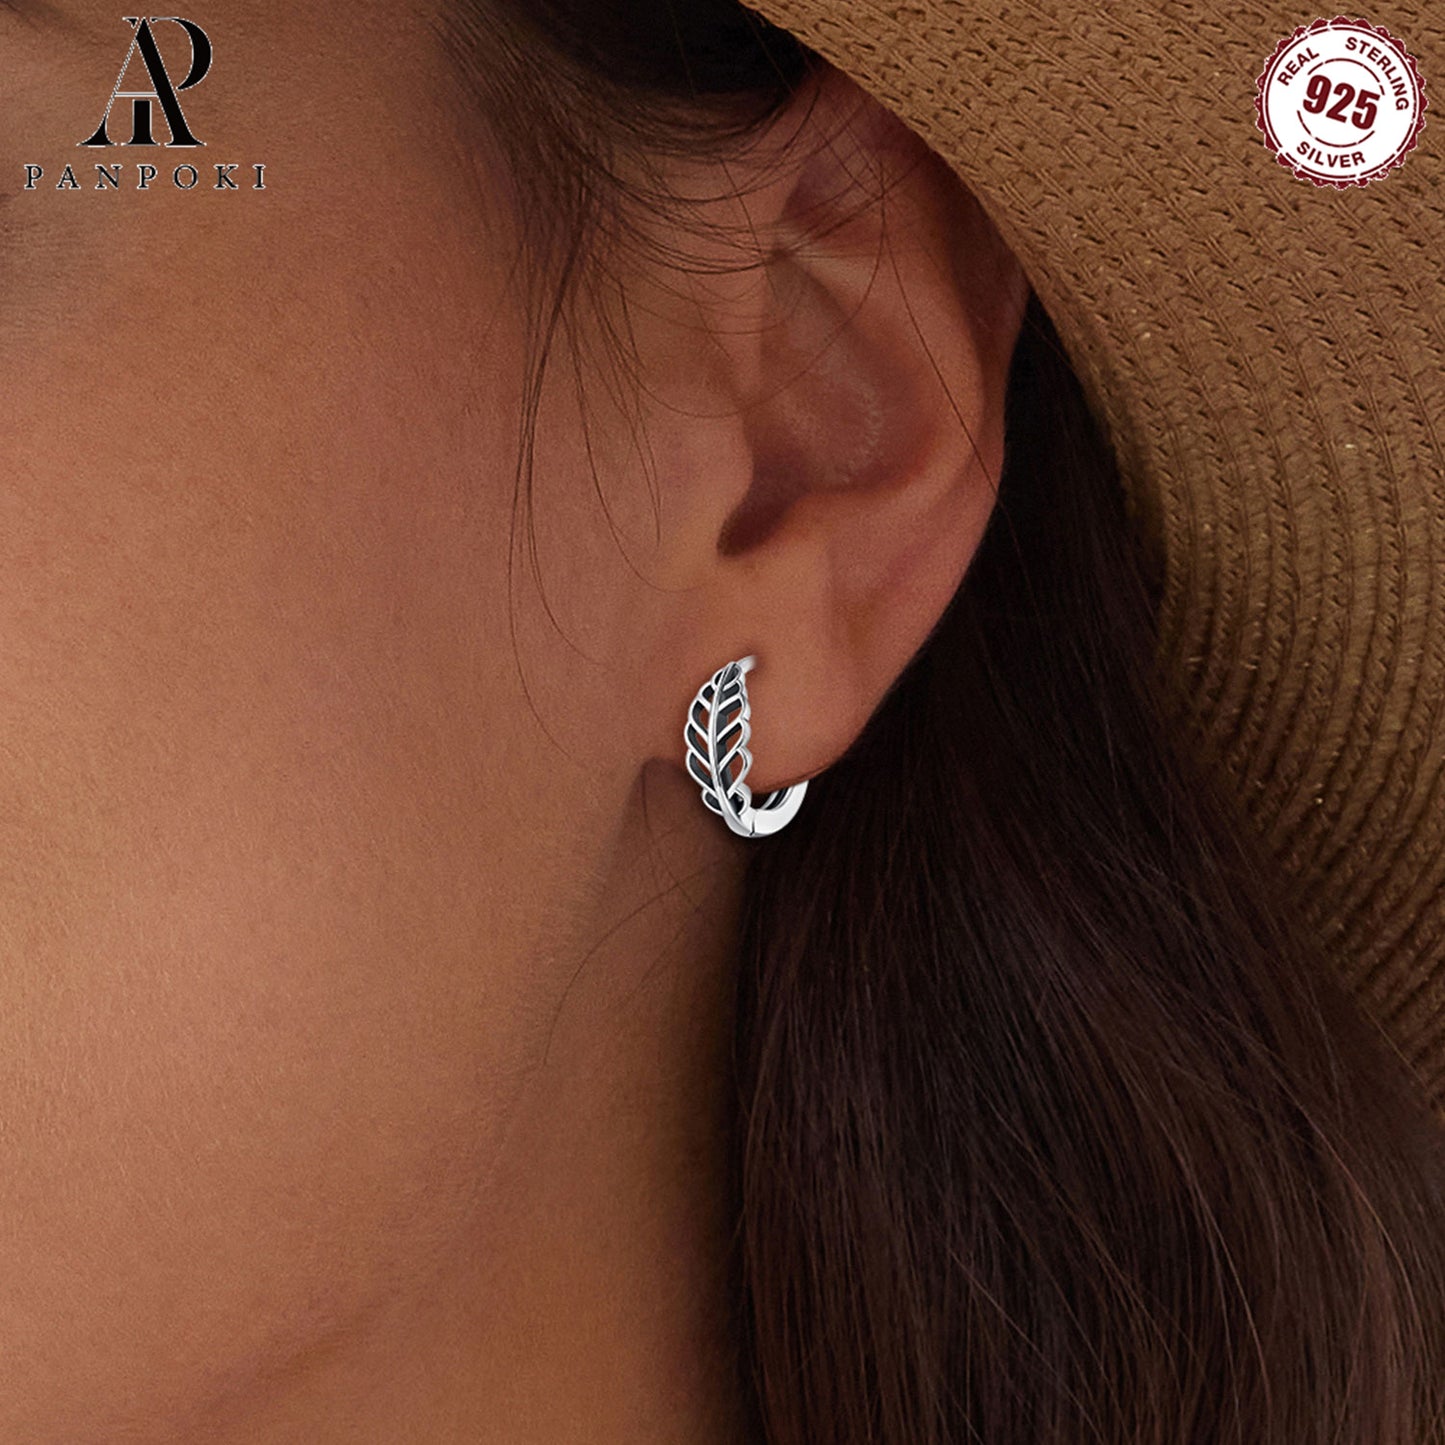 925 Silver Hypoallergenic Hoop Earrings With Delicate Hollow Leaf Pattern Simple Elegant Style Female Gifts